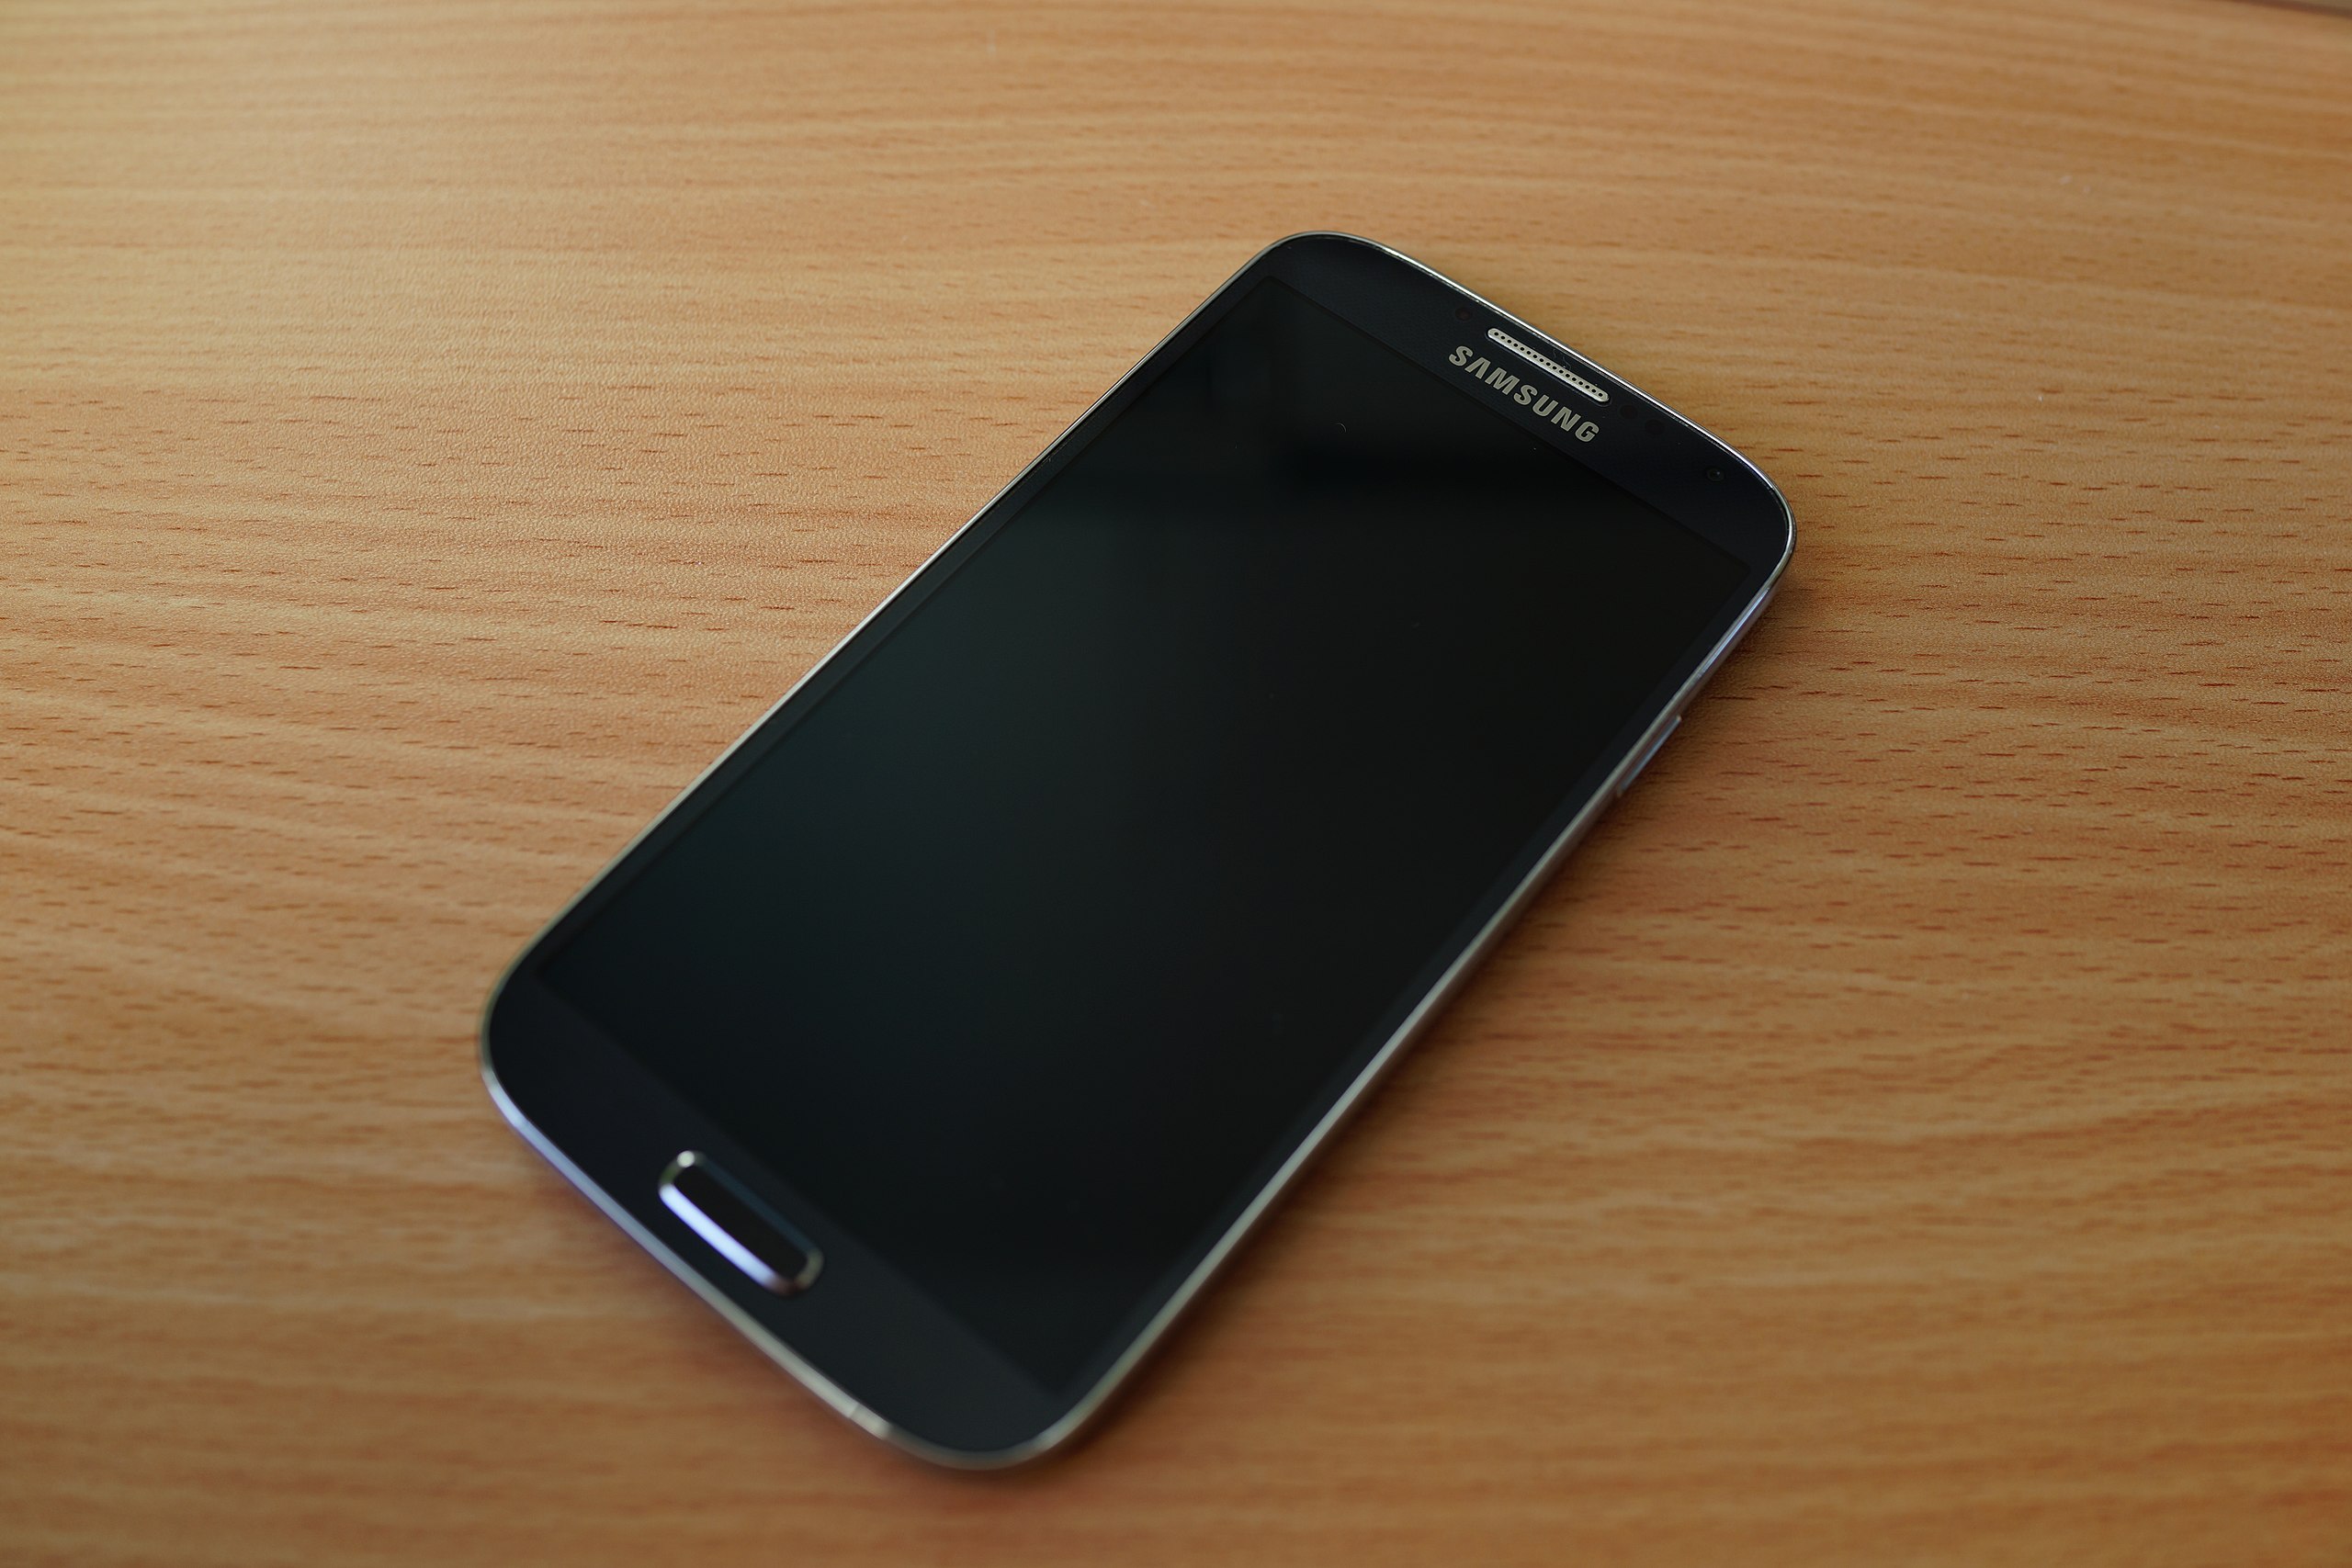 Samsung Galaxy - Wikimedia Commons